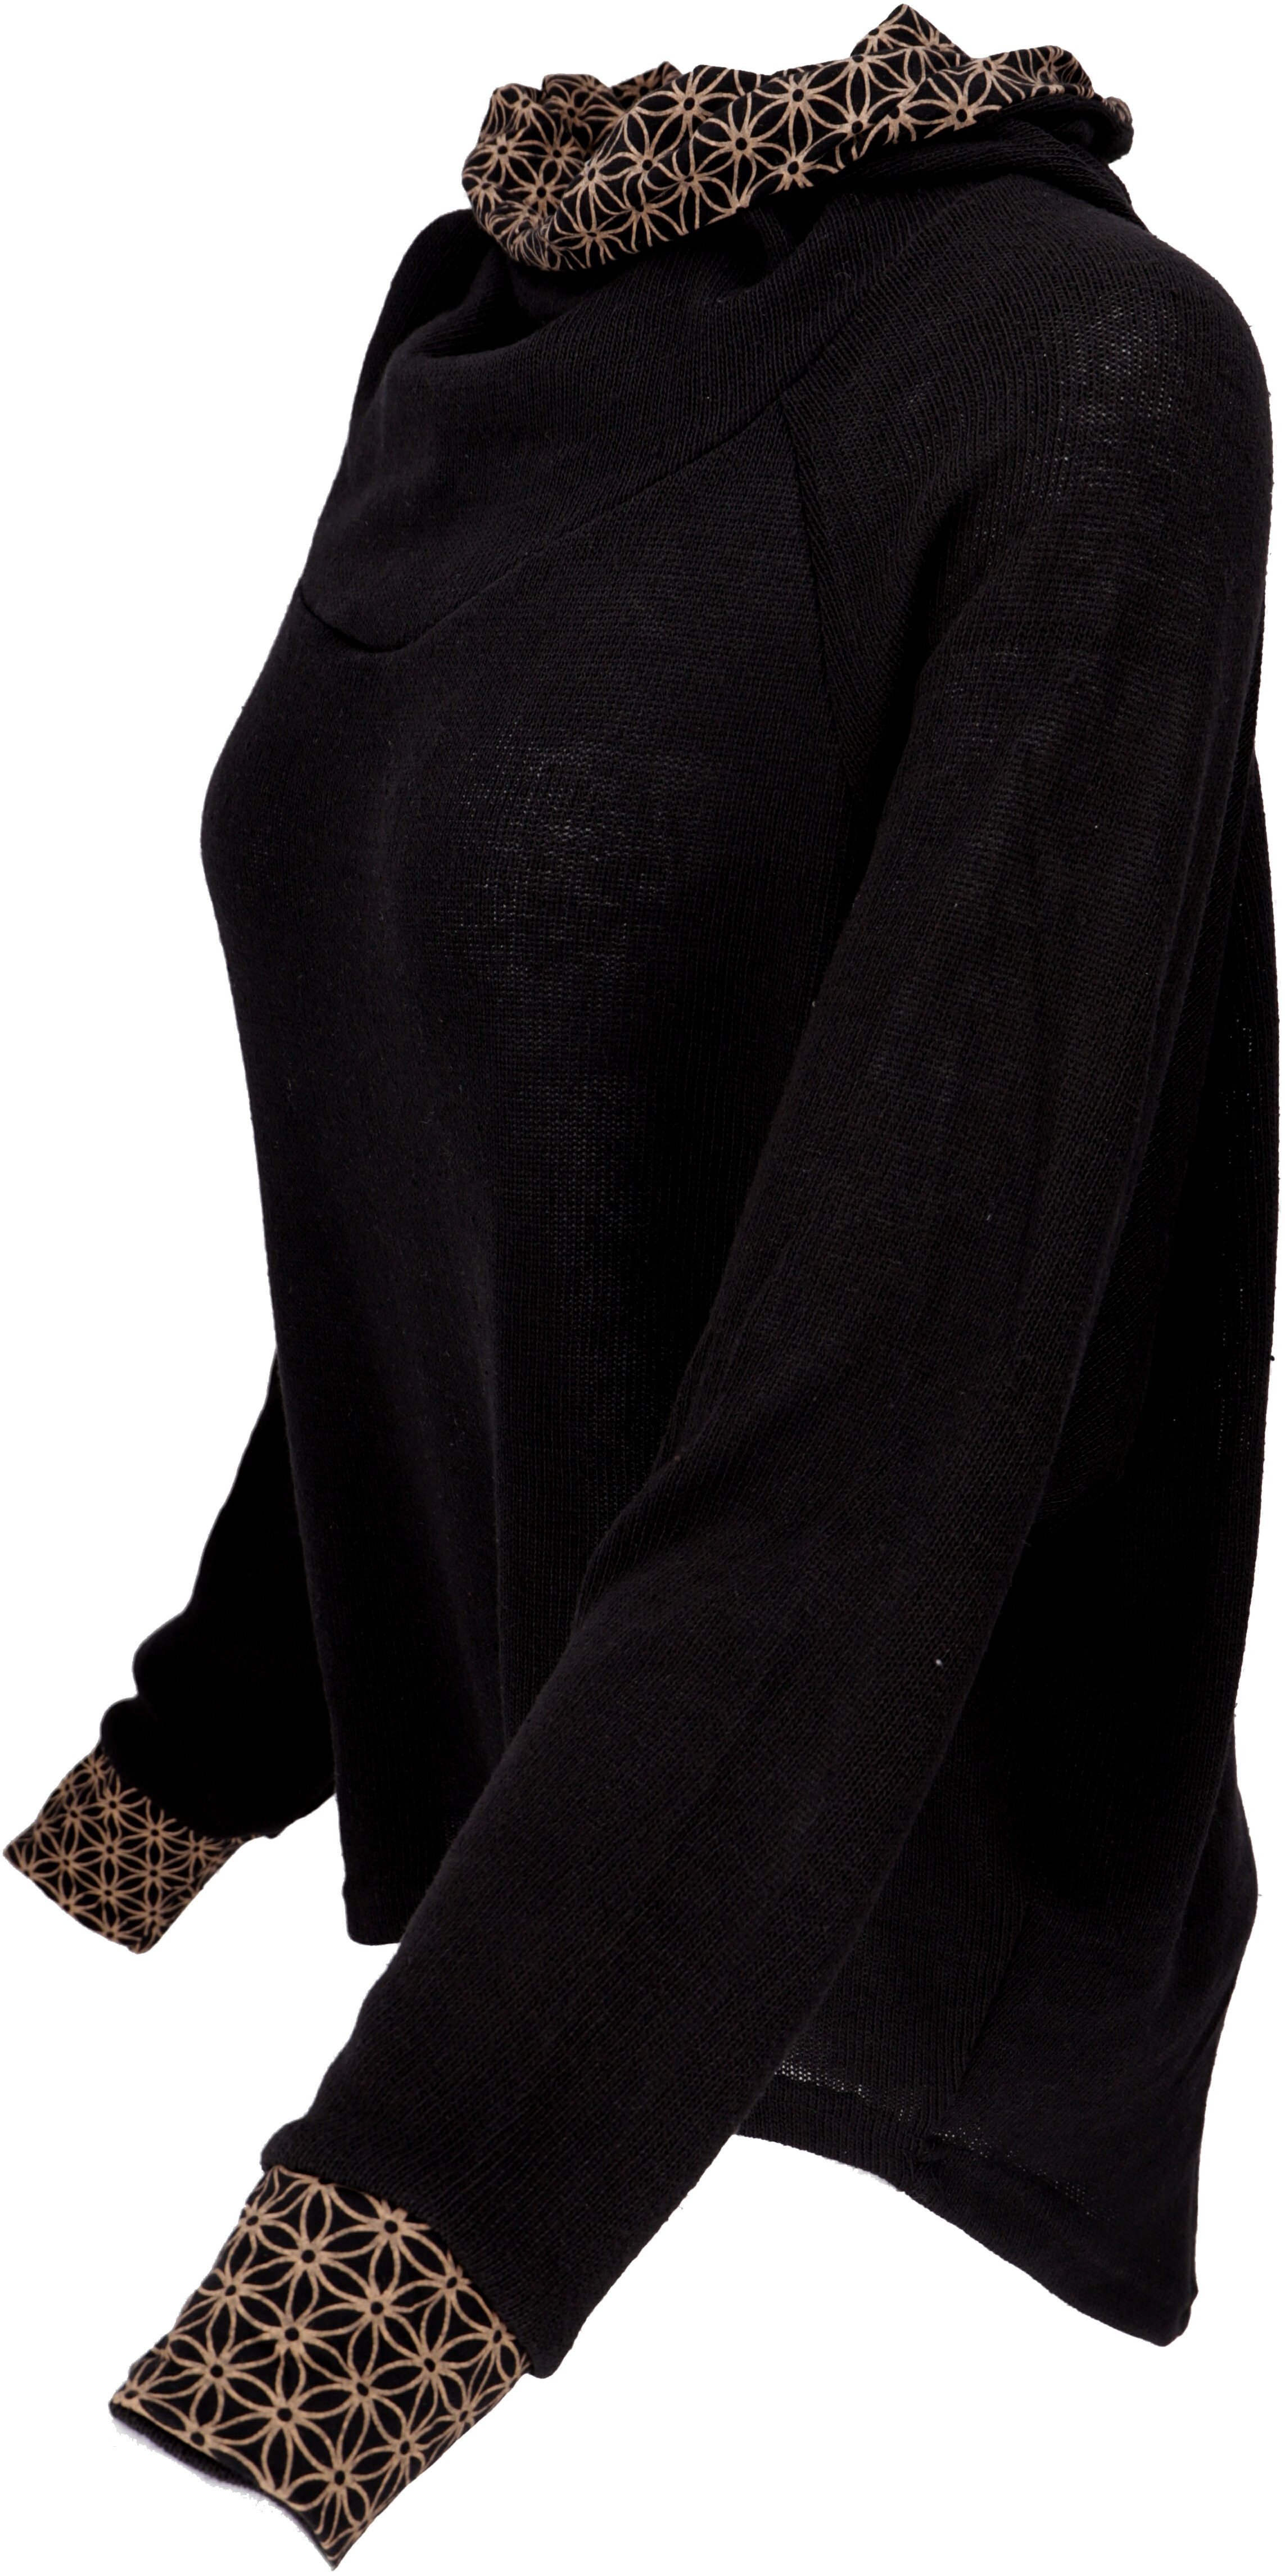 Bekleidung Kapuzenpullover Hoody, -.. Pullover, alternative Sweatshirt, Longsleeve schwarz Guru-Shop